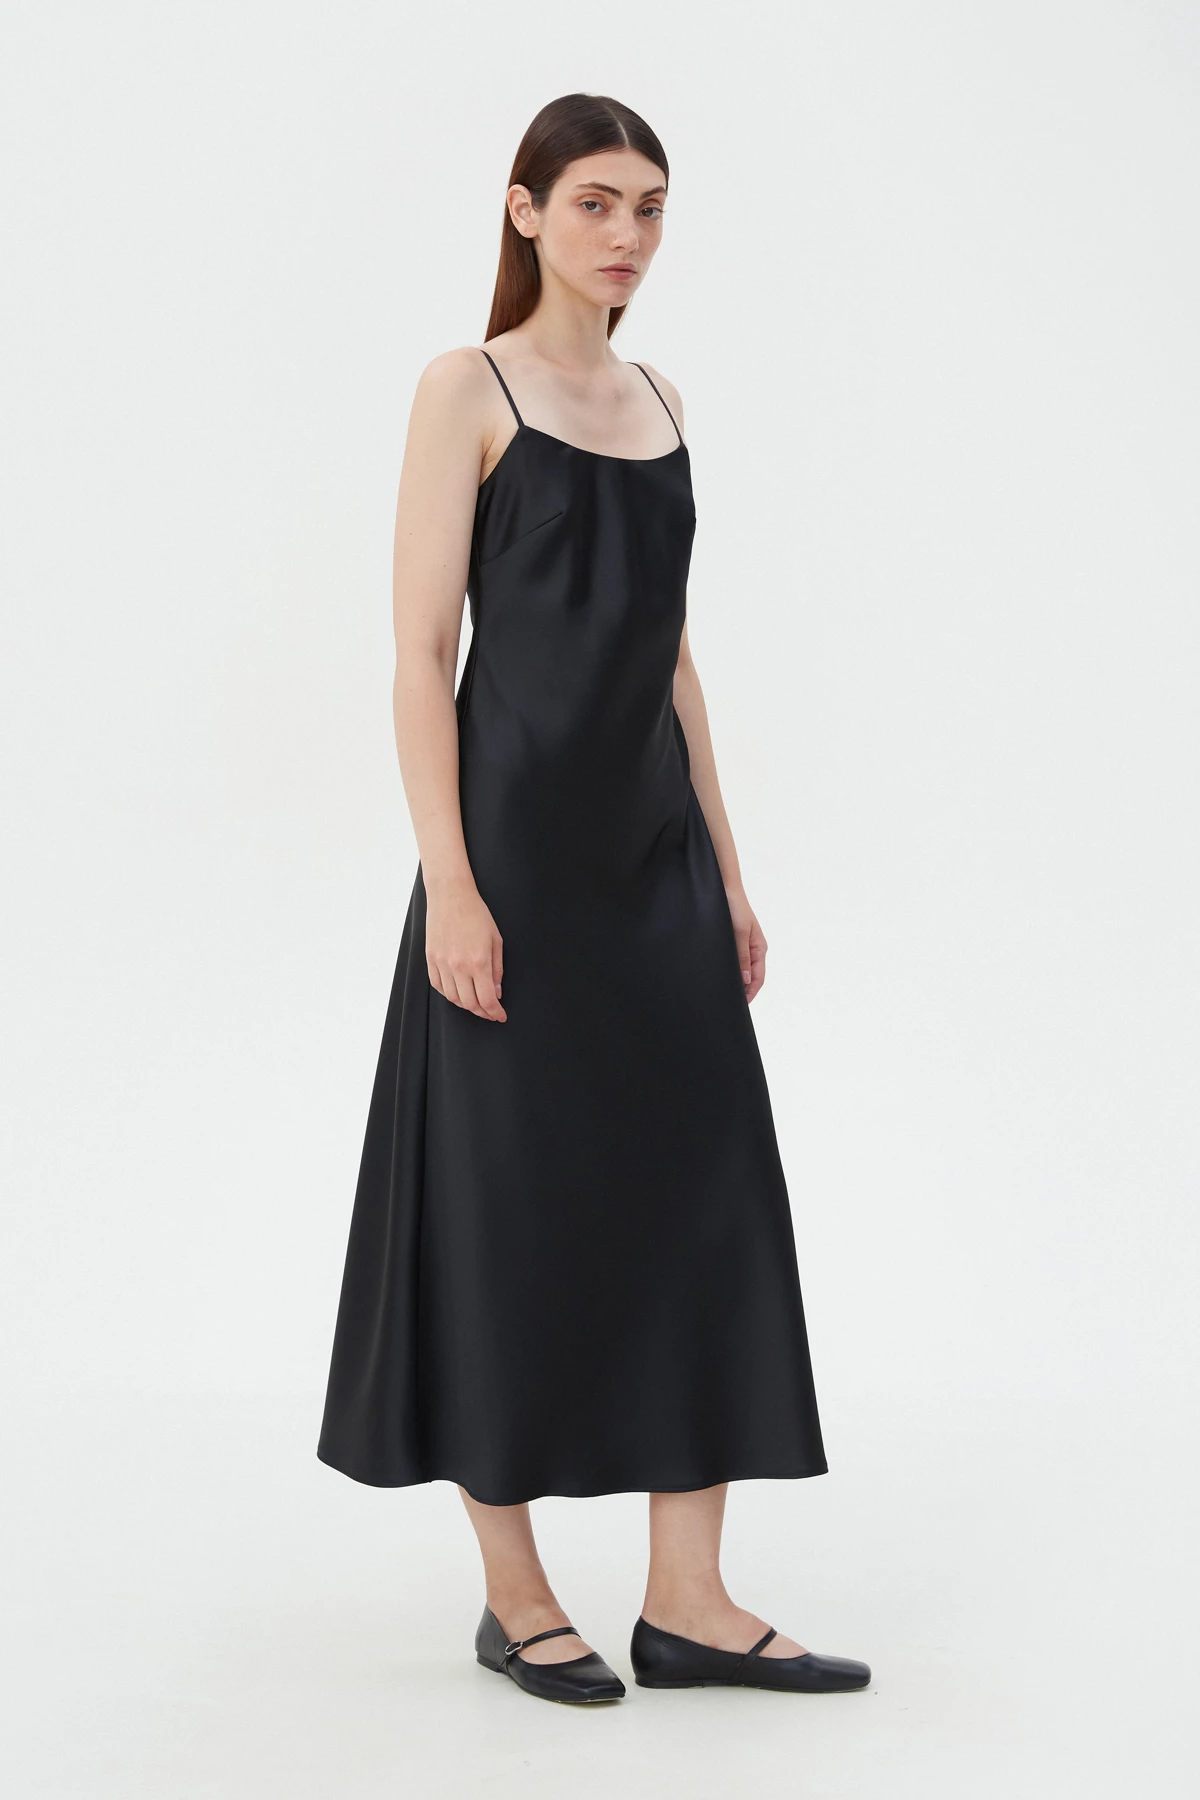 Black satin open-back dress, photo 2